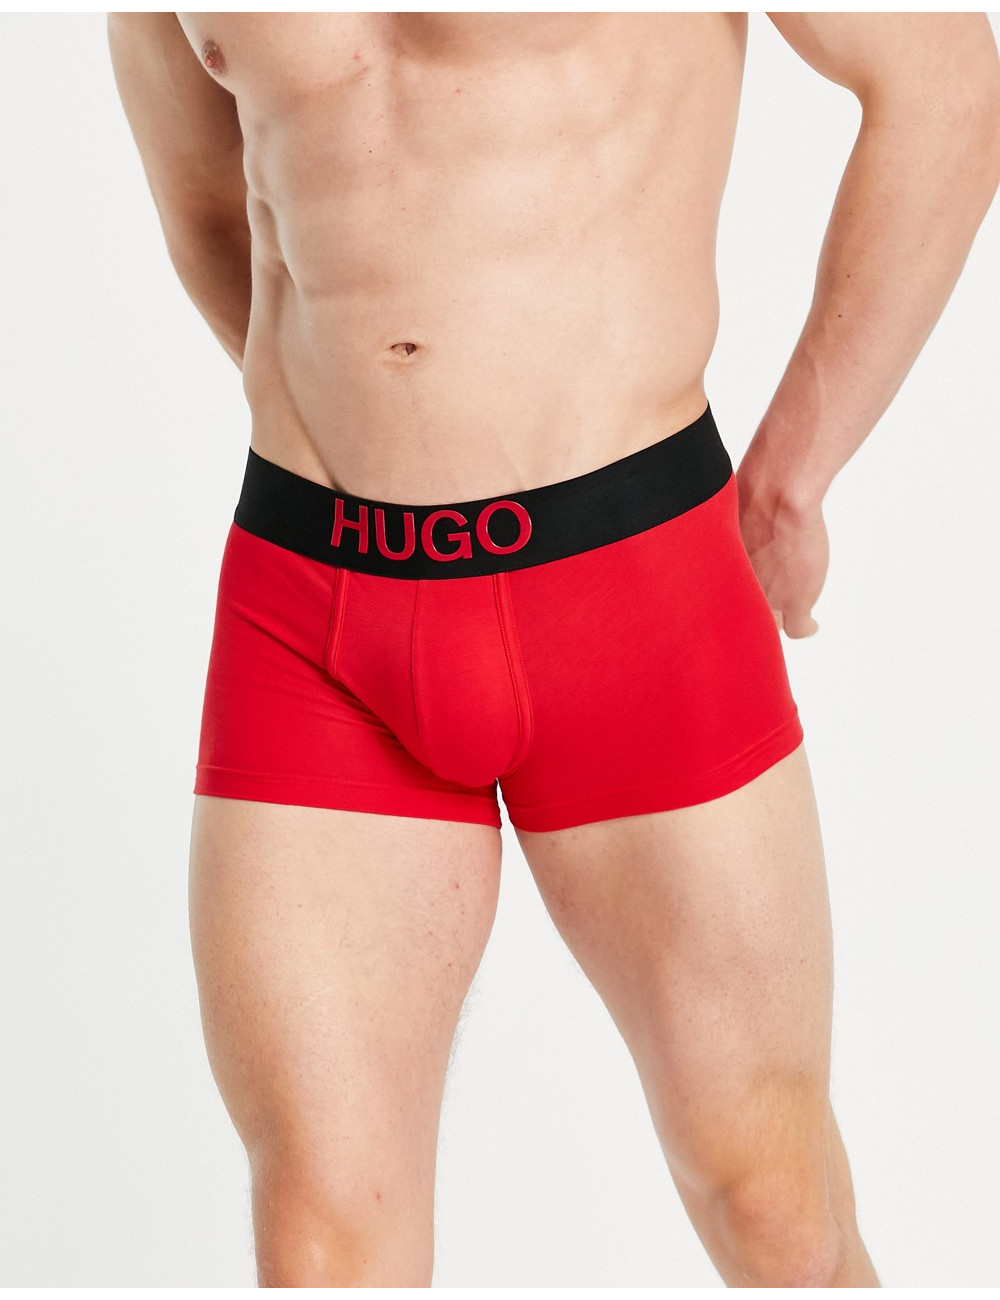 HUGO Bodywear Iconic trunks...